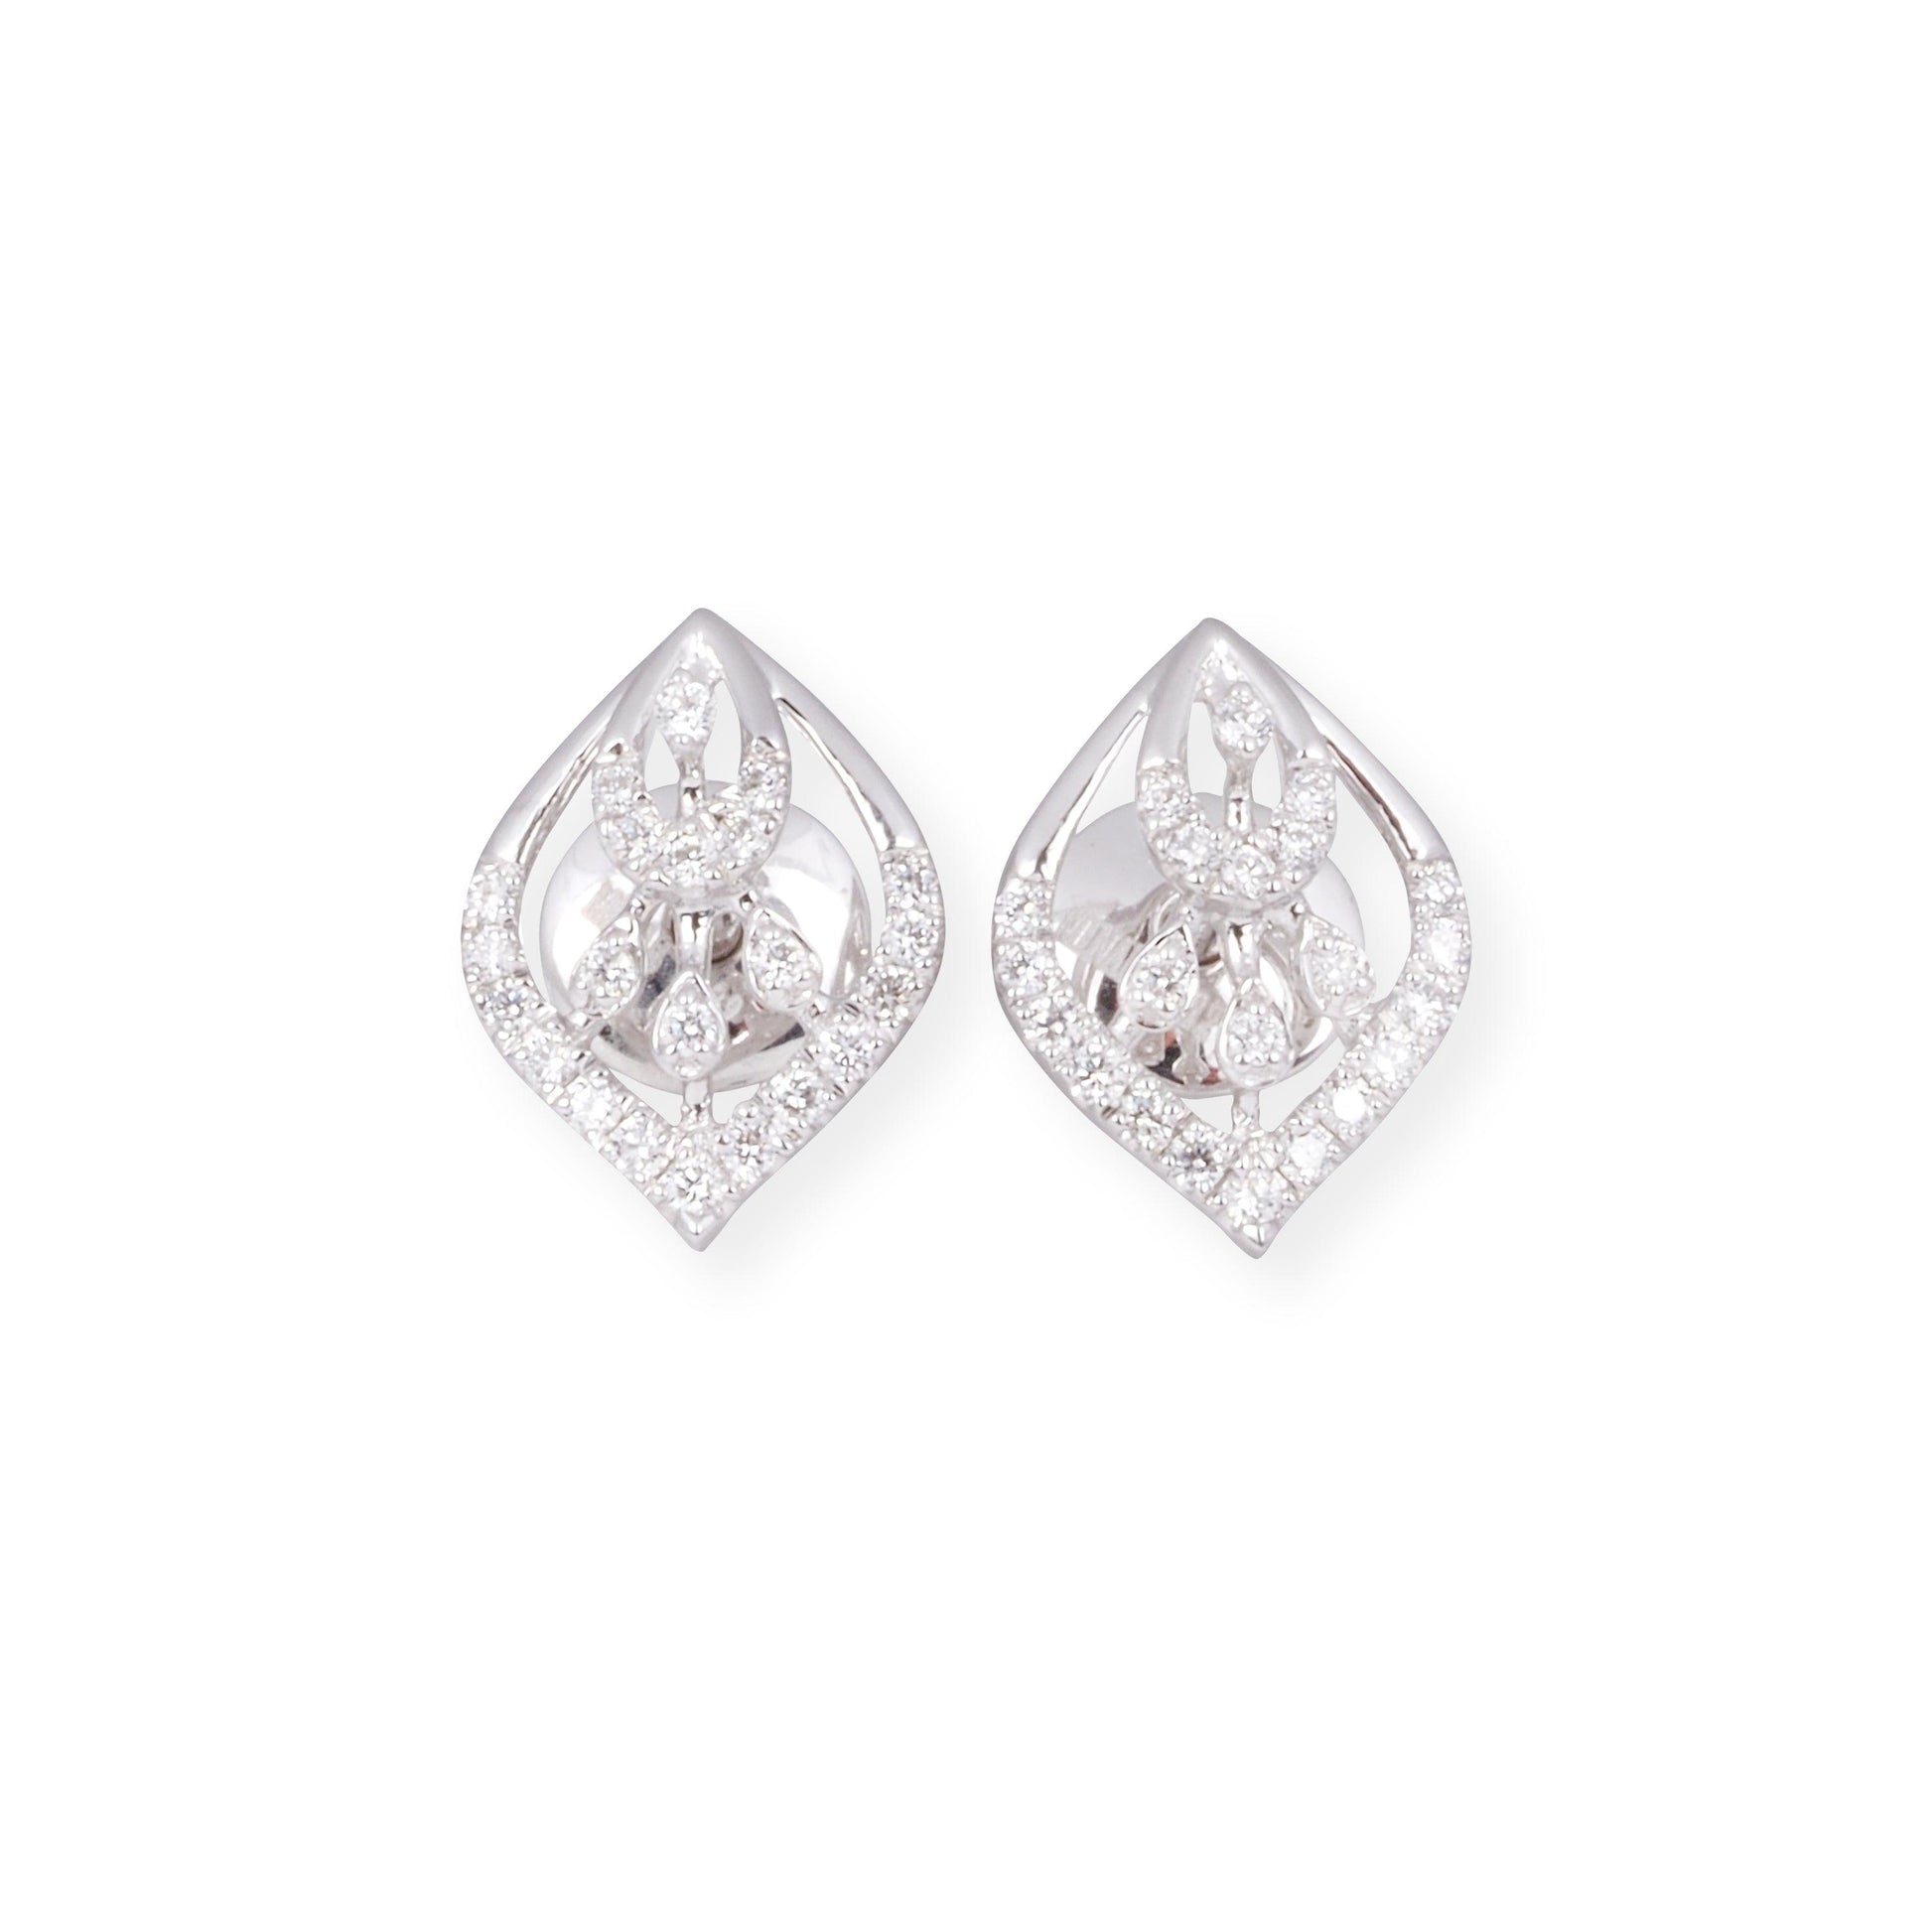 18ct White Gold Round-Cut Diamond Set (Pendant + Chain + Earrings) MCS6870/71 - Minar Jewellers